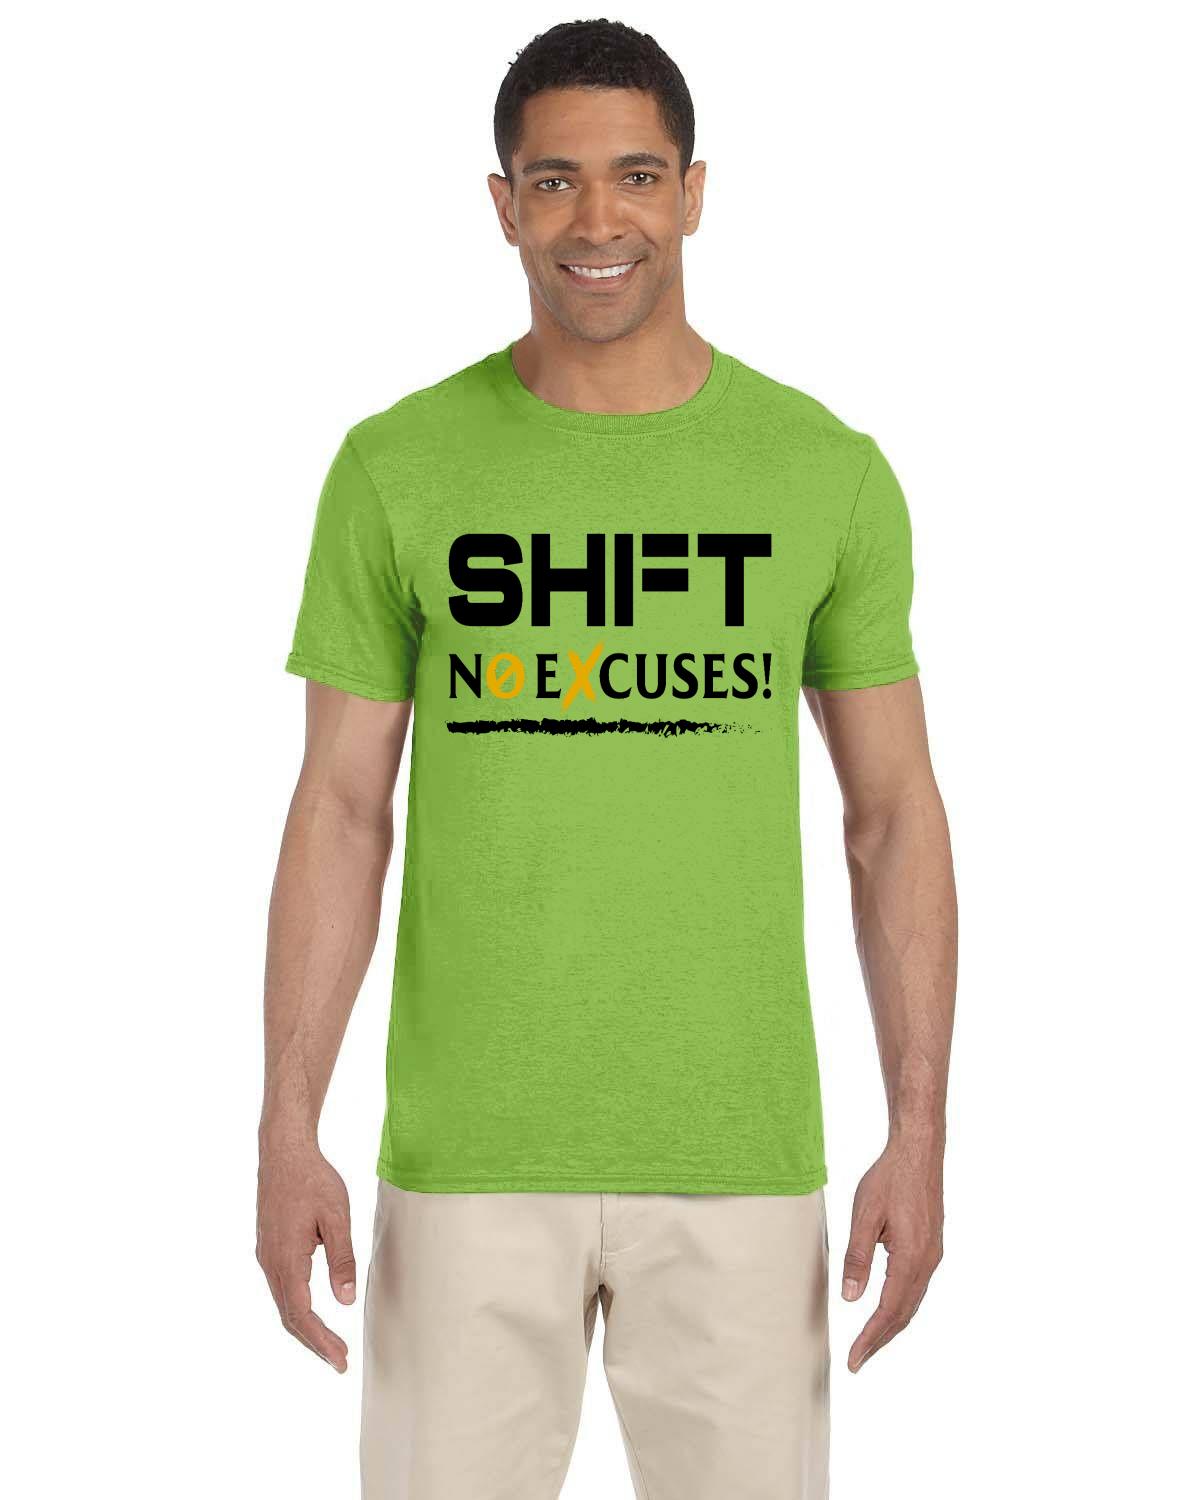 Shift No Excuse Softstyle T-Shirt